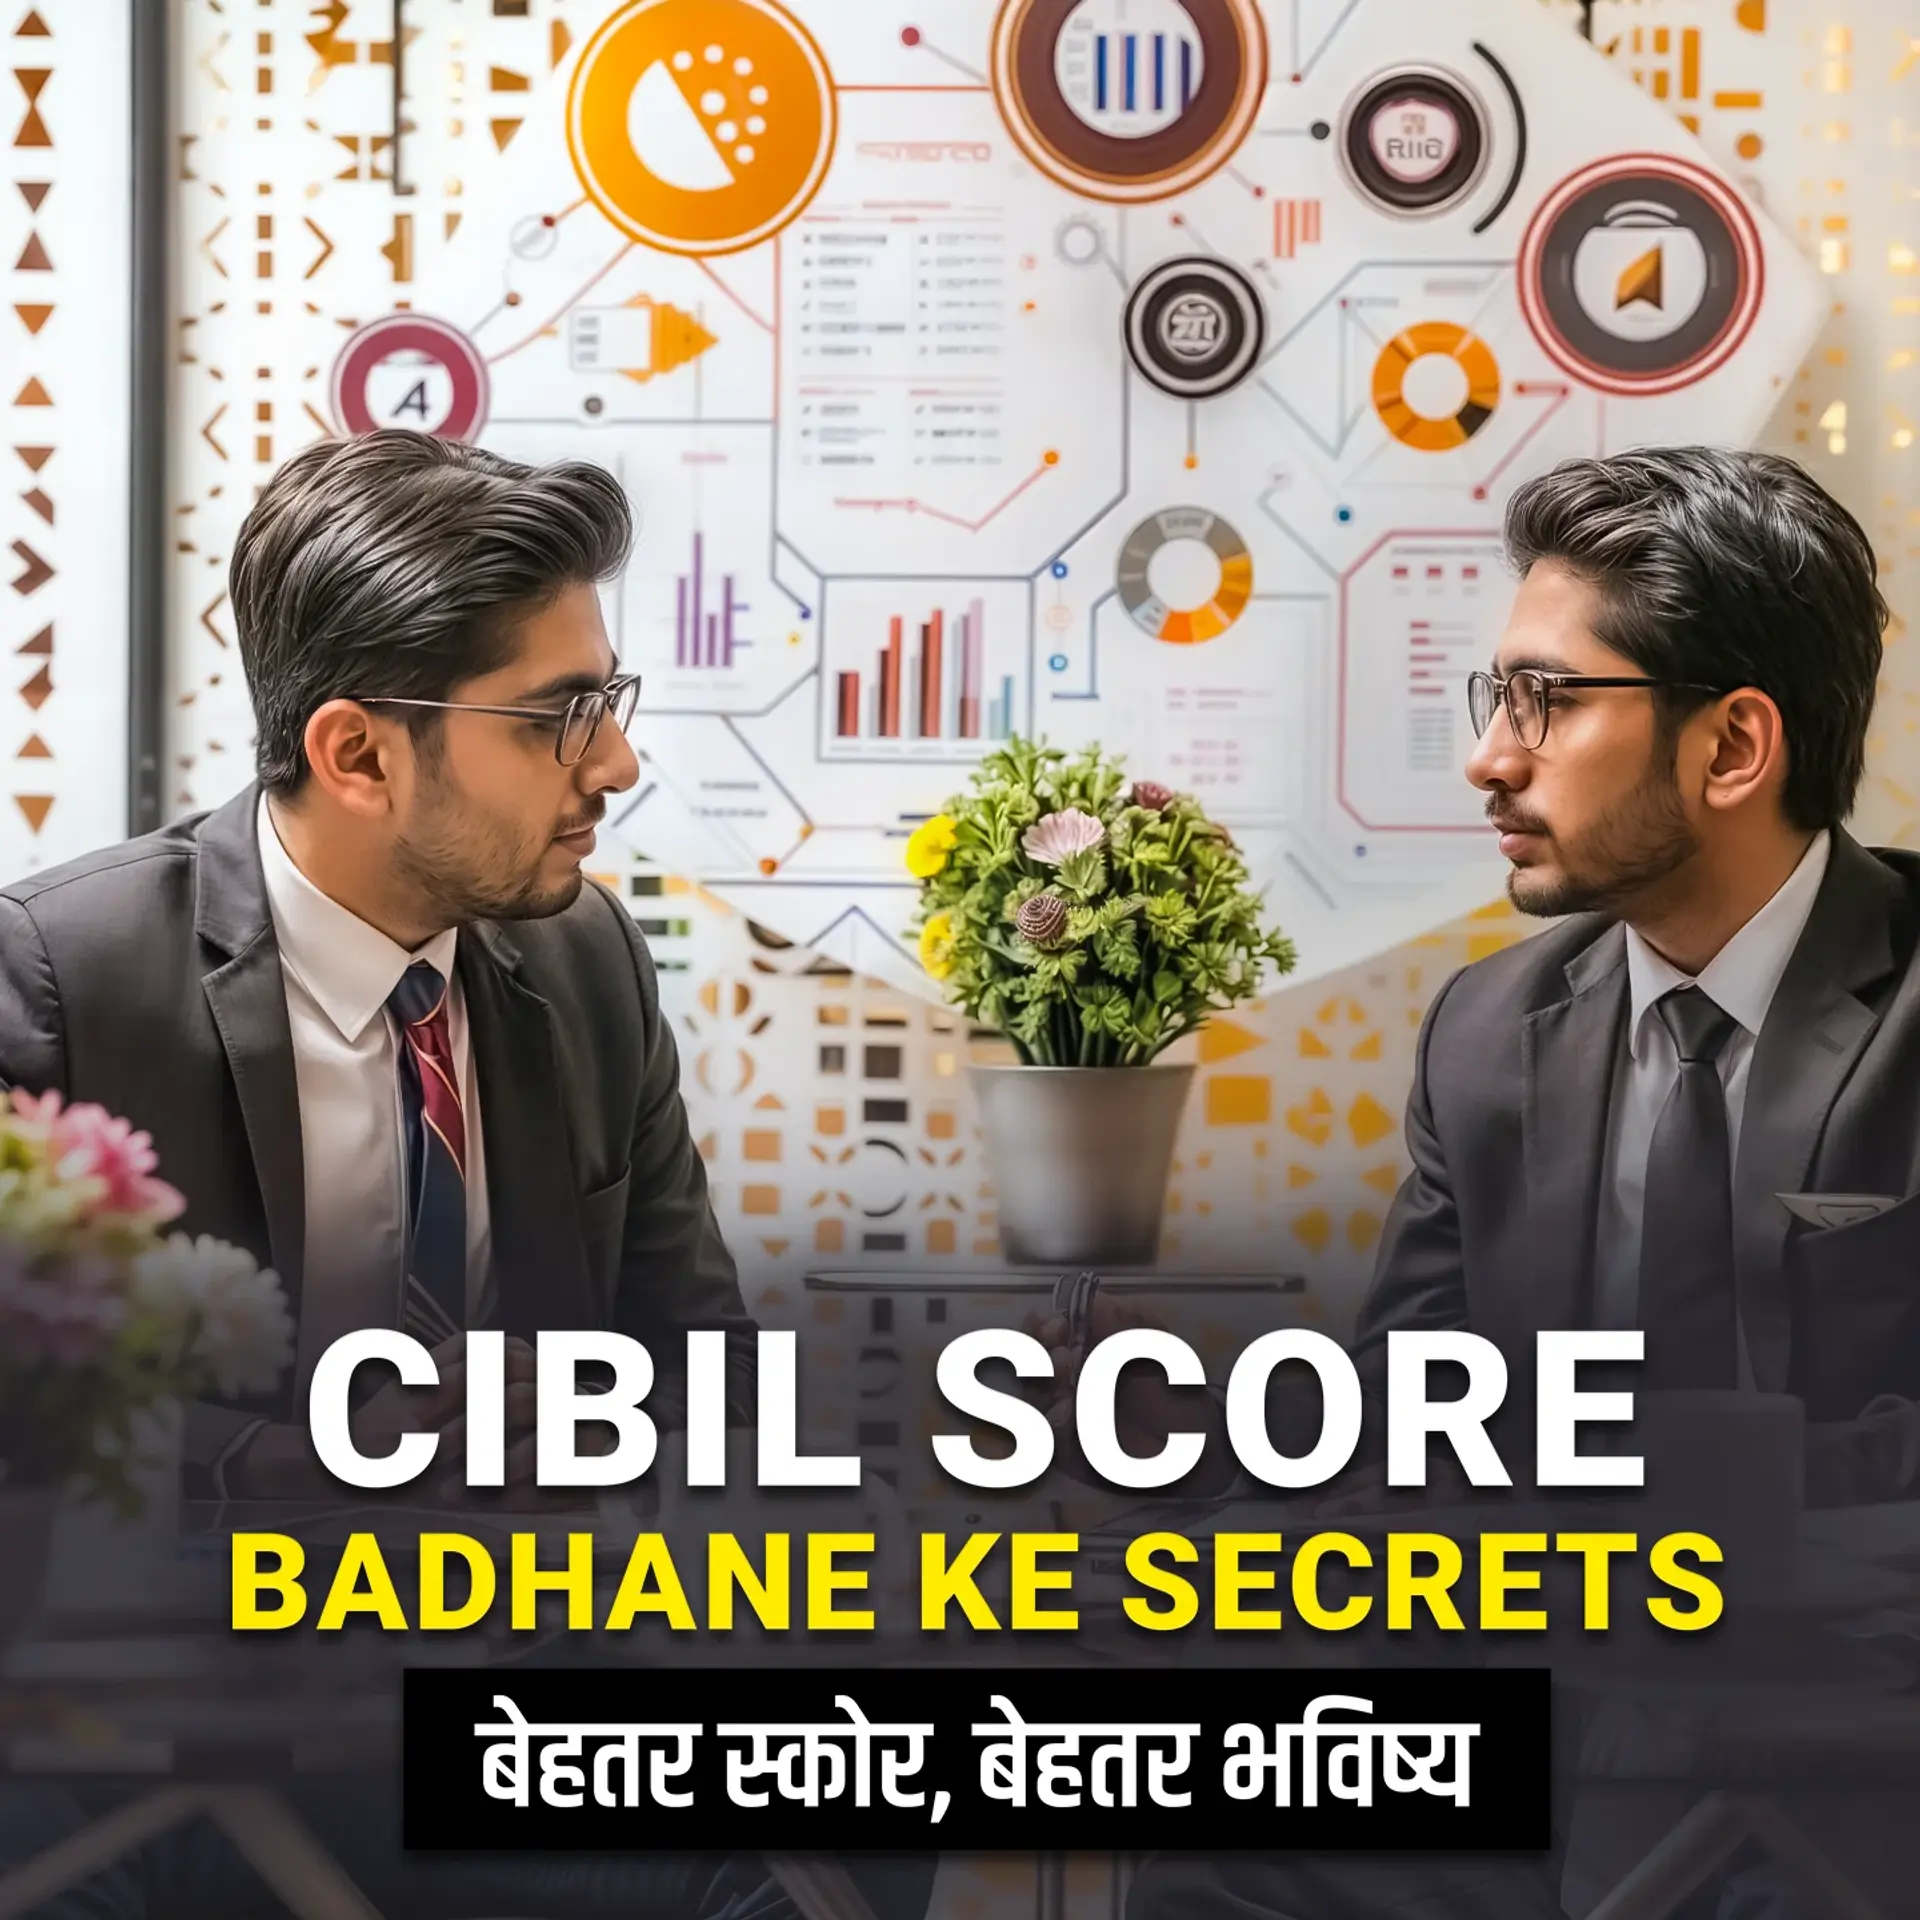 Cibil Score Badhane Ke Secrets: बेहतर स्कोर बेहतर भविष्य | 